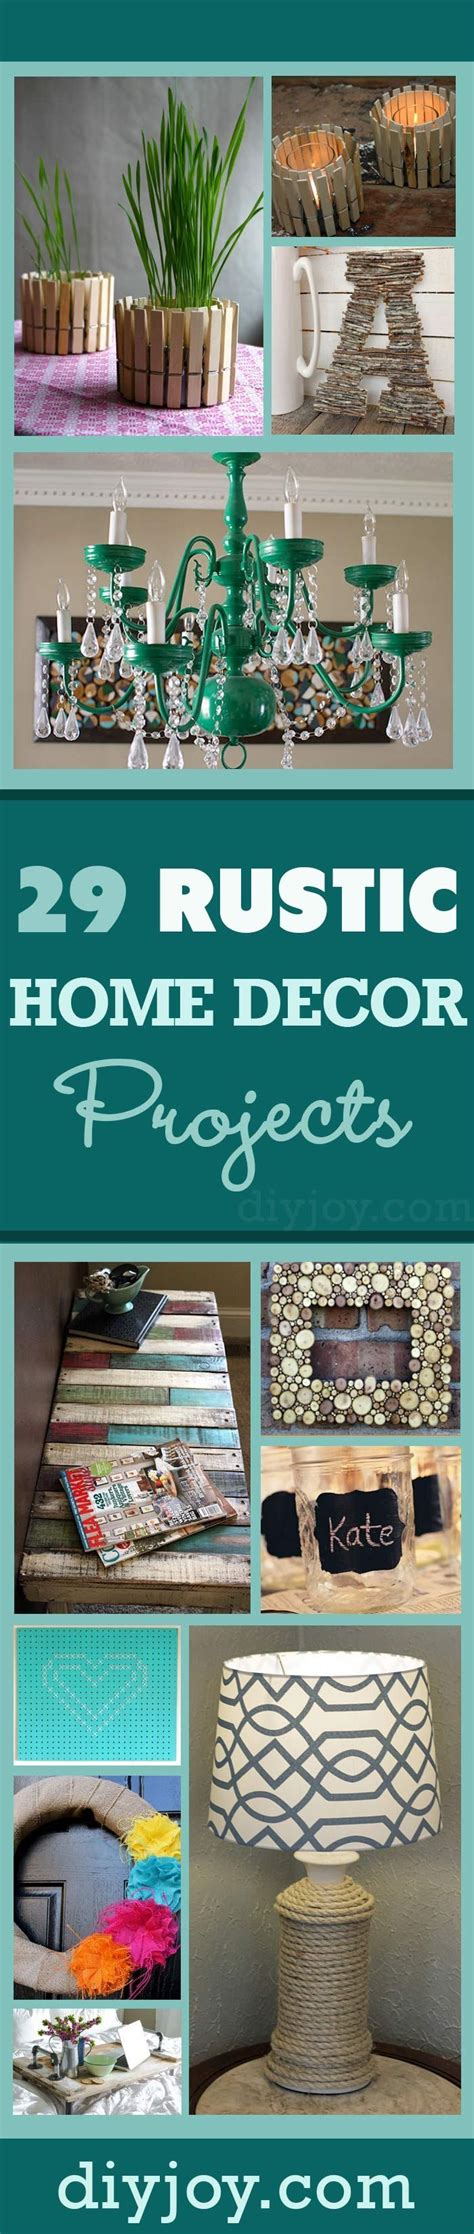 rustic diy home decor ideas diy joy  decorating ideas